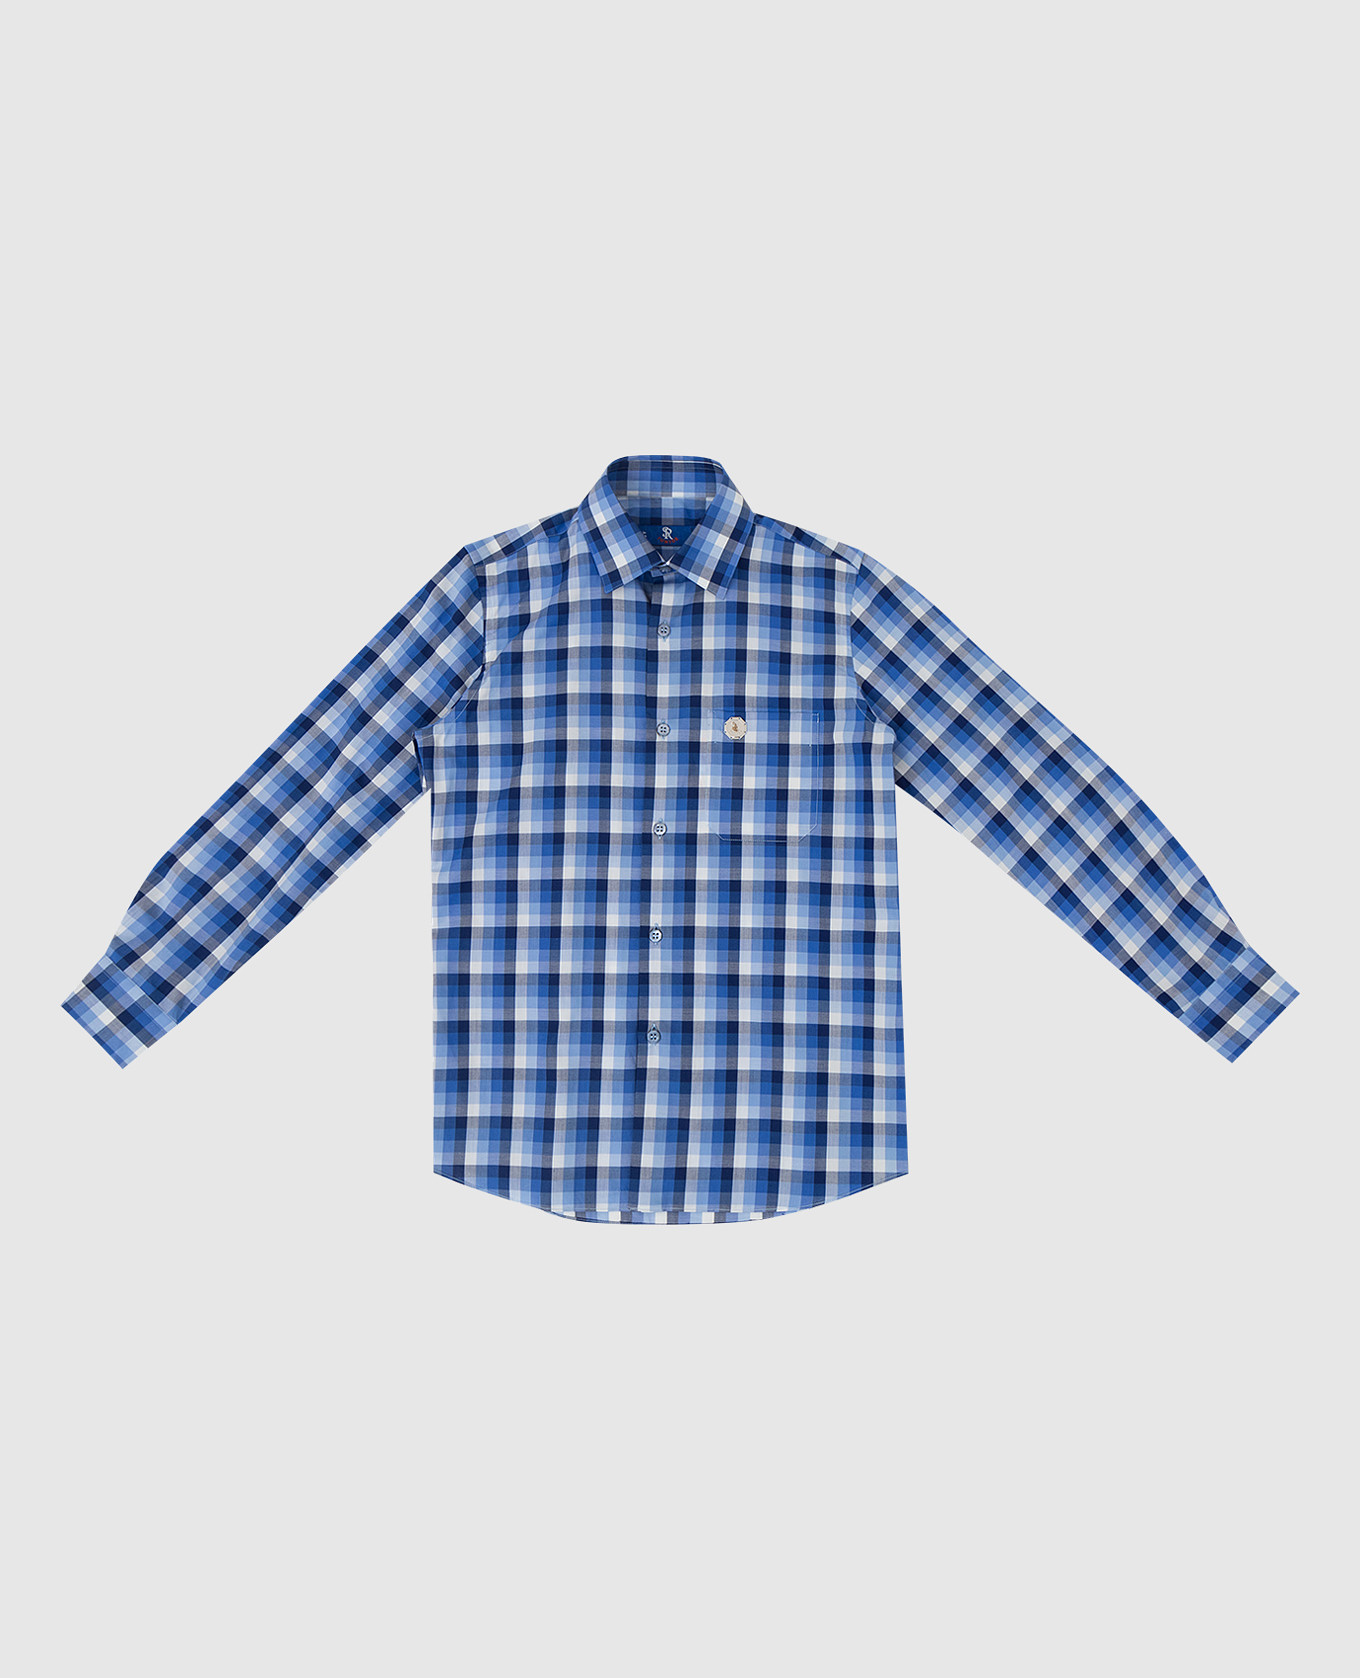 Children's checkered shirt